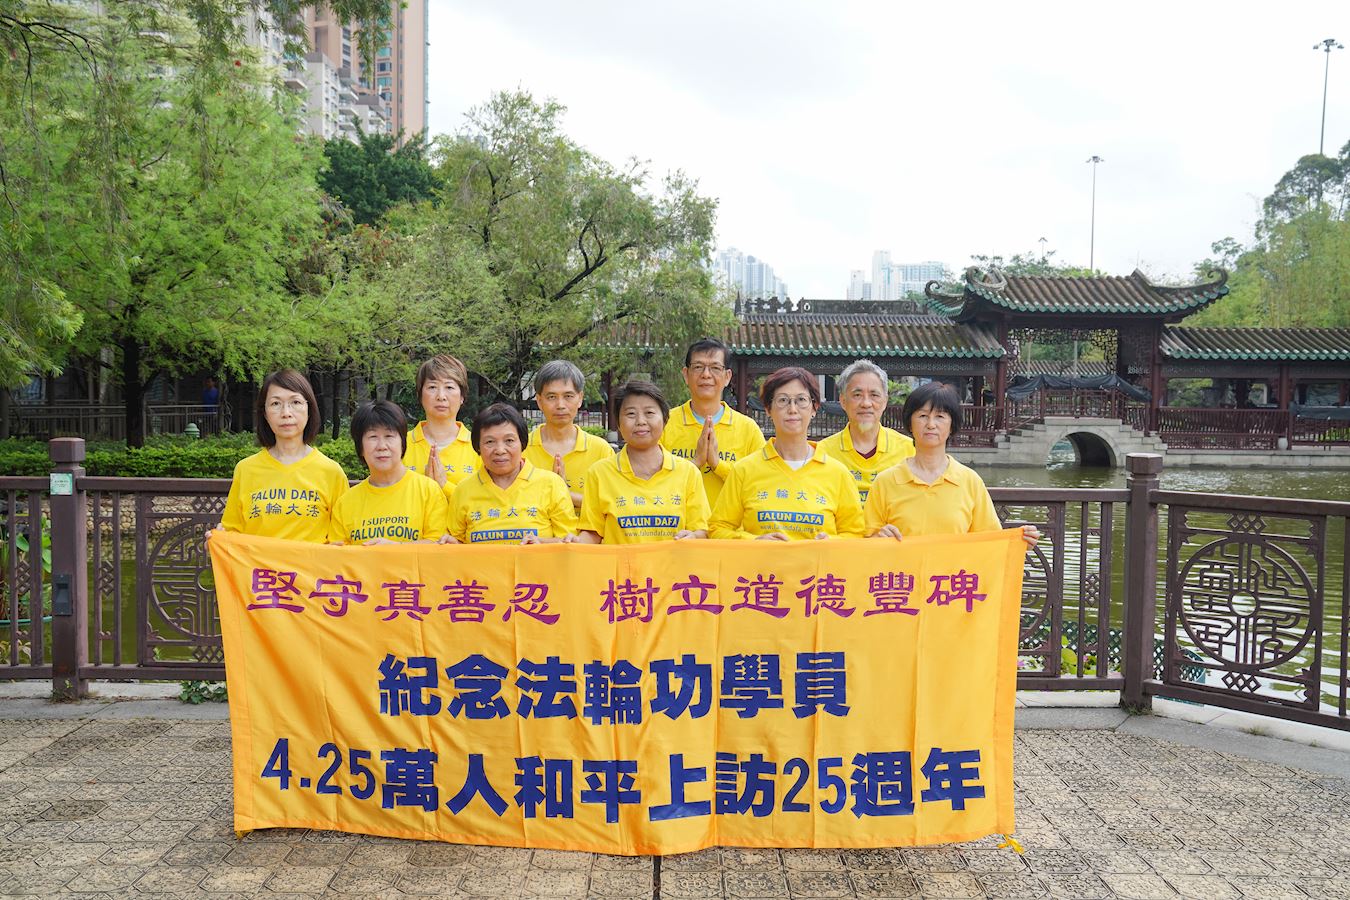 Image for article ผู้ฝึกฝ่าหลุนกงทั่วฮ่องกงร่วมรำลึกถึงการอุทธรณ์ในวันที่ 25 เมษายน